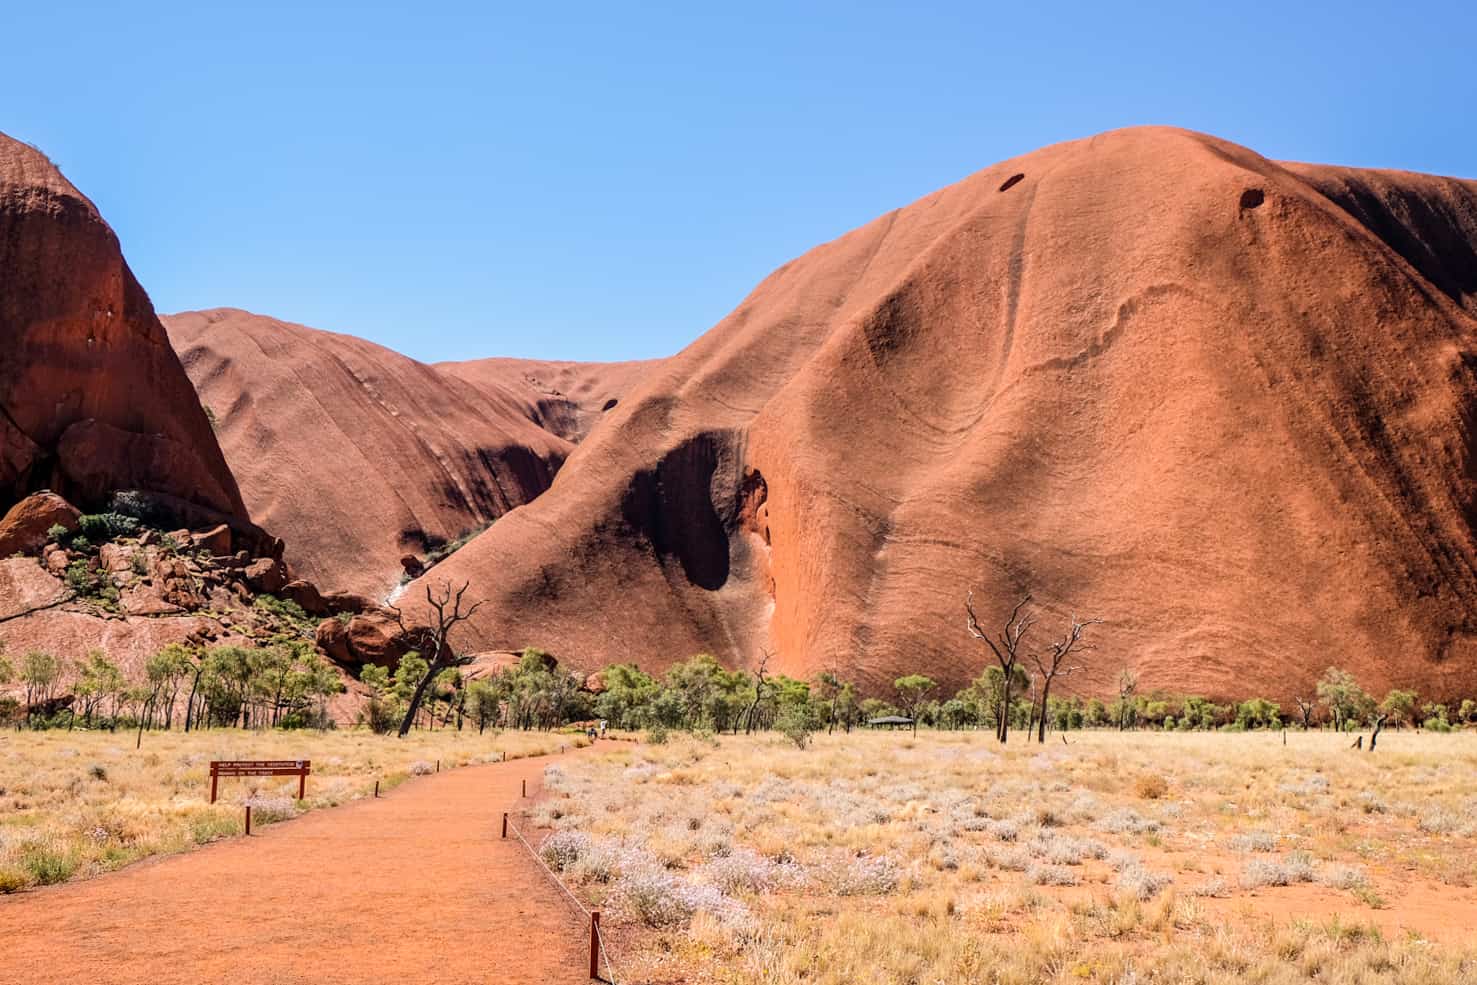 The ochre orange giant rock formations of Uluru Ayers Rock in Australia. 